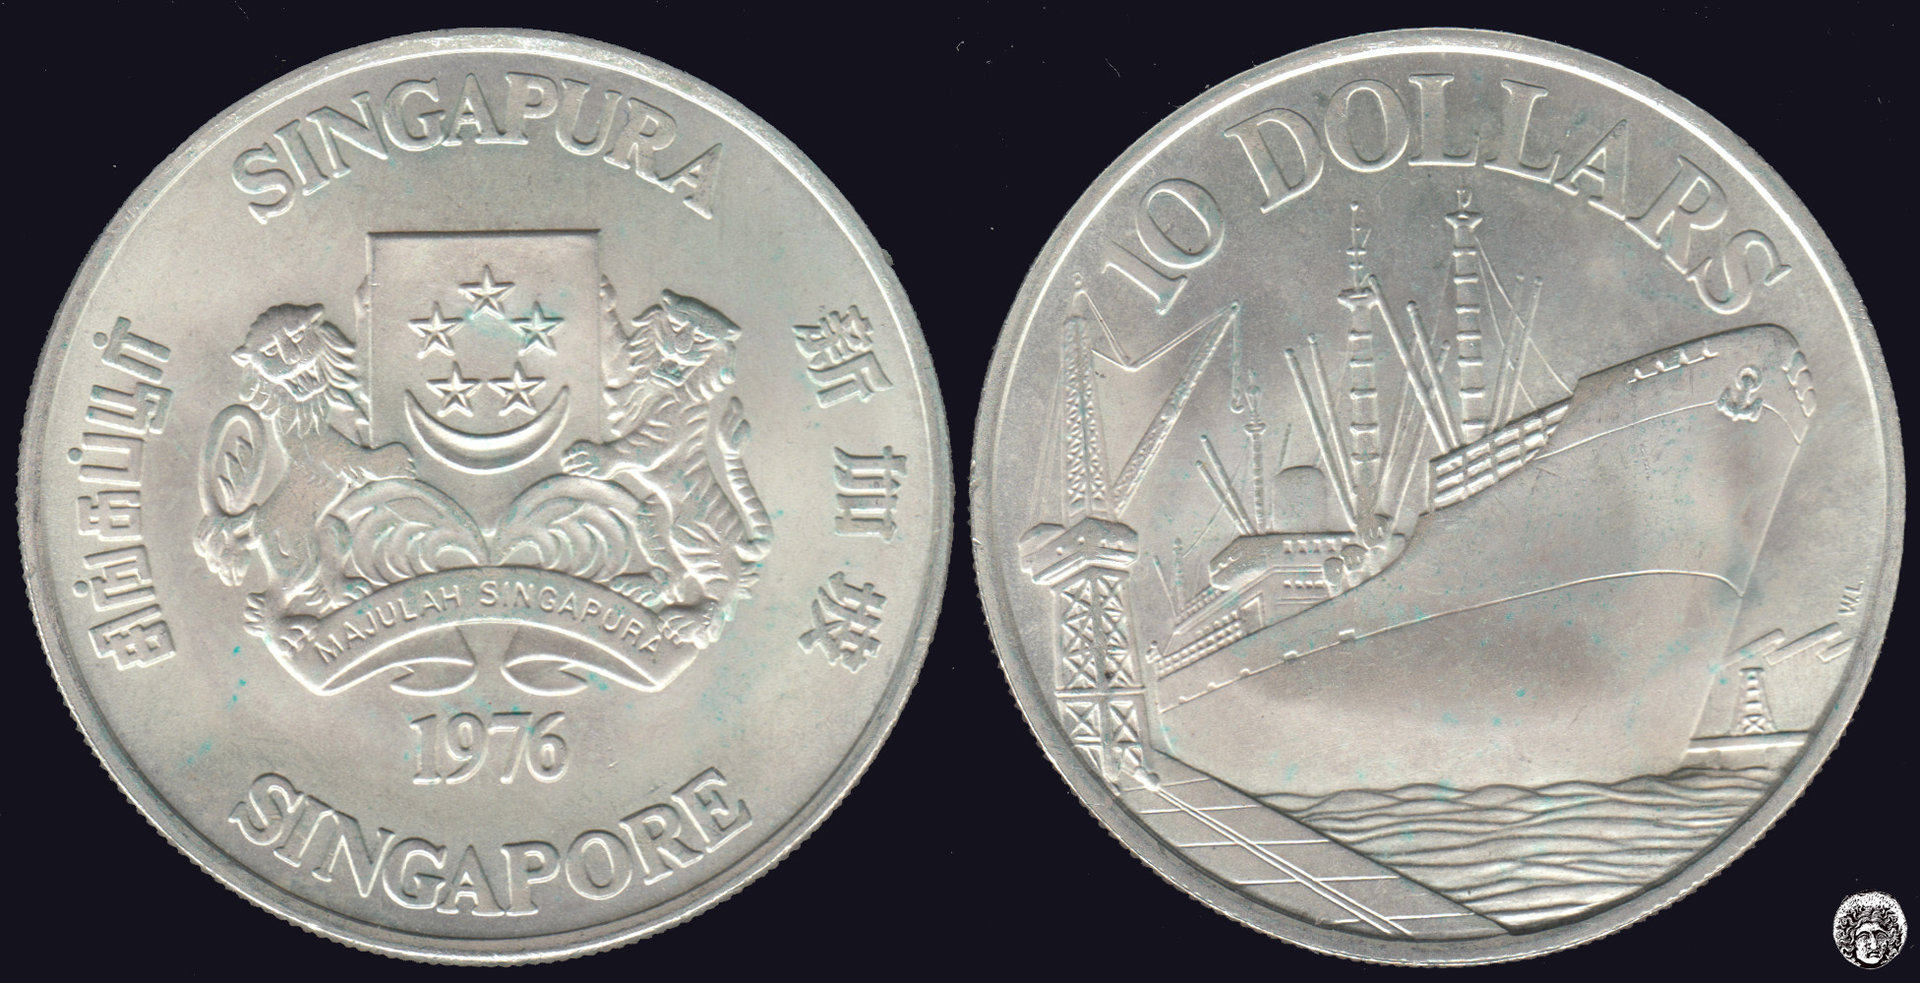 SINGAPUR - SINGAPORE. 10 DOLARES (DOLLARS) DE 1976. PLATA 0.500. (2)